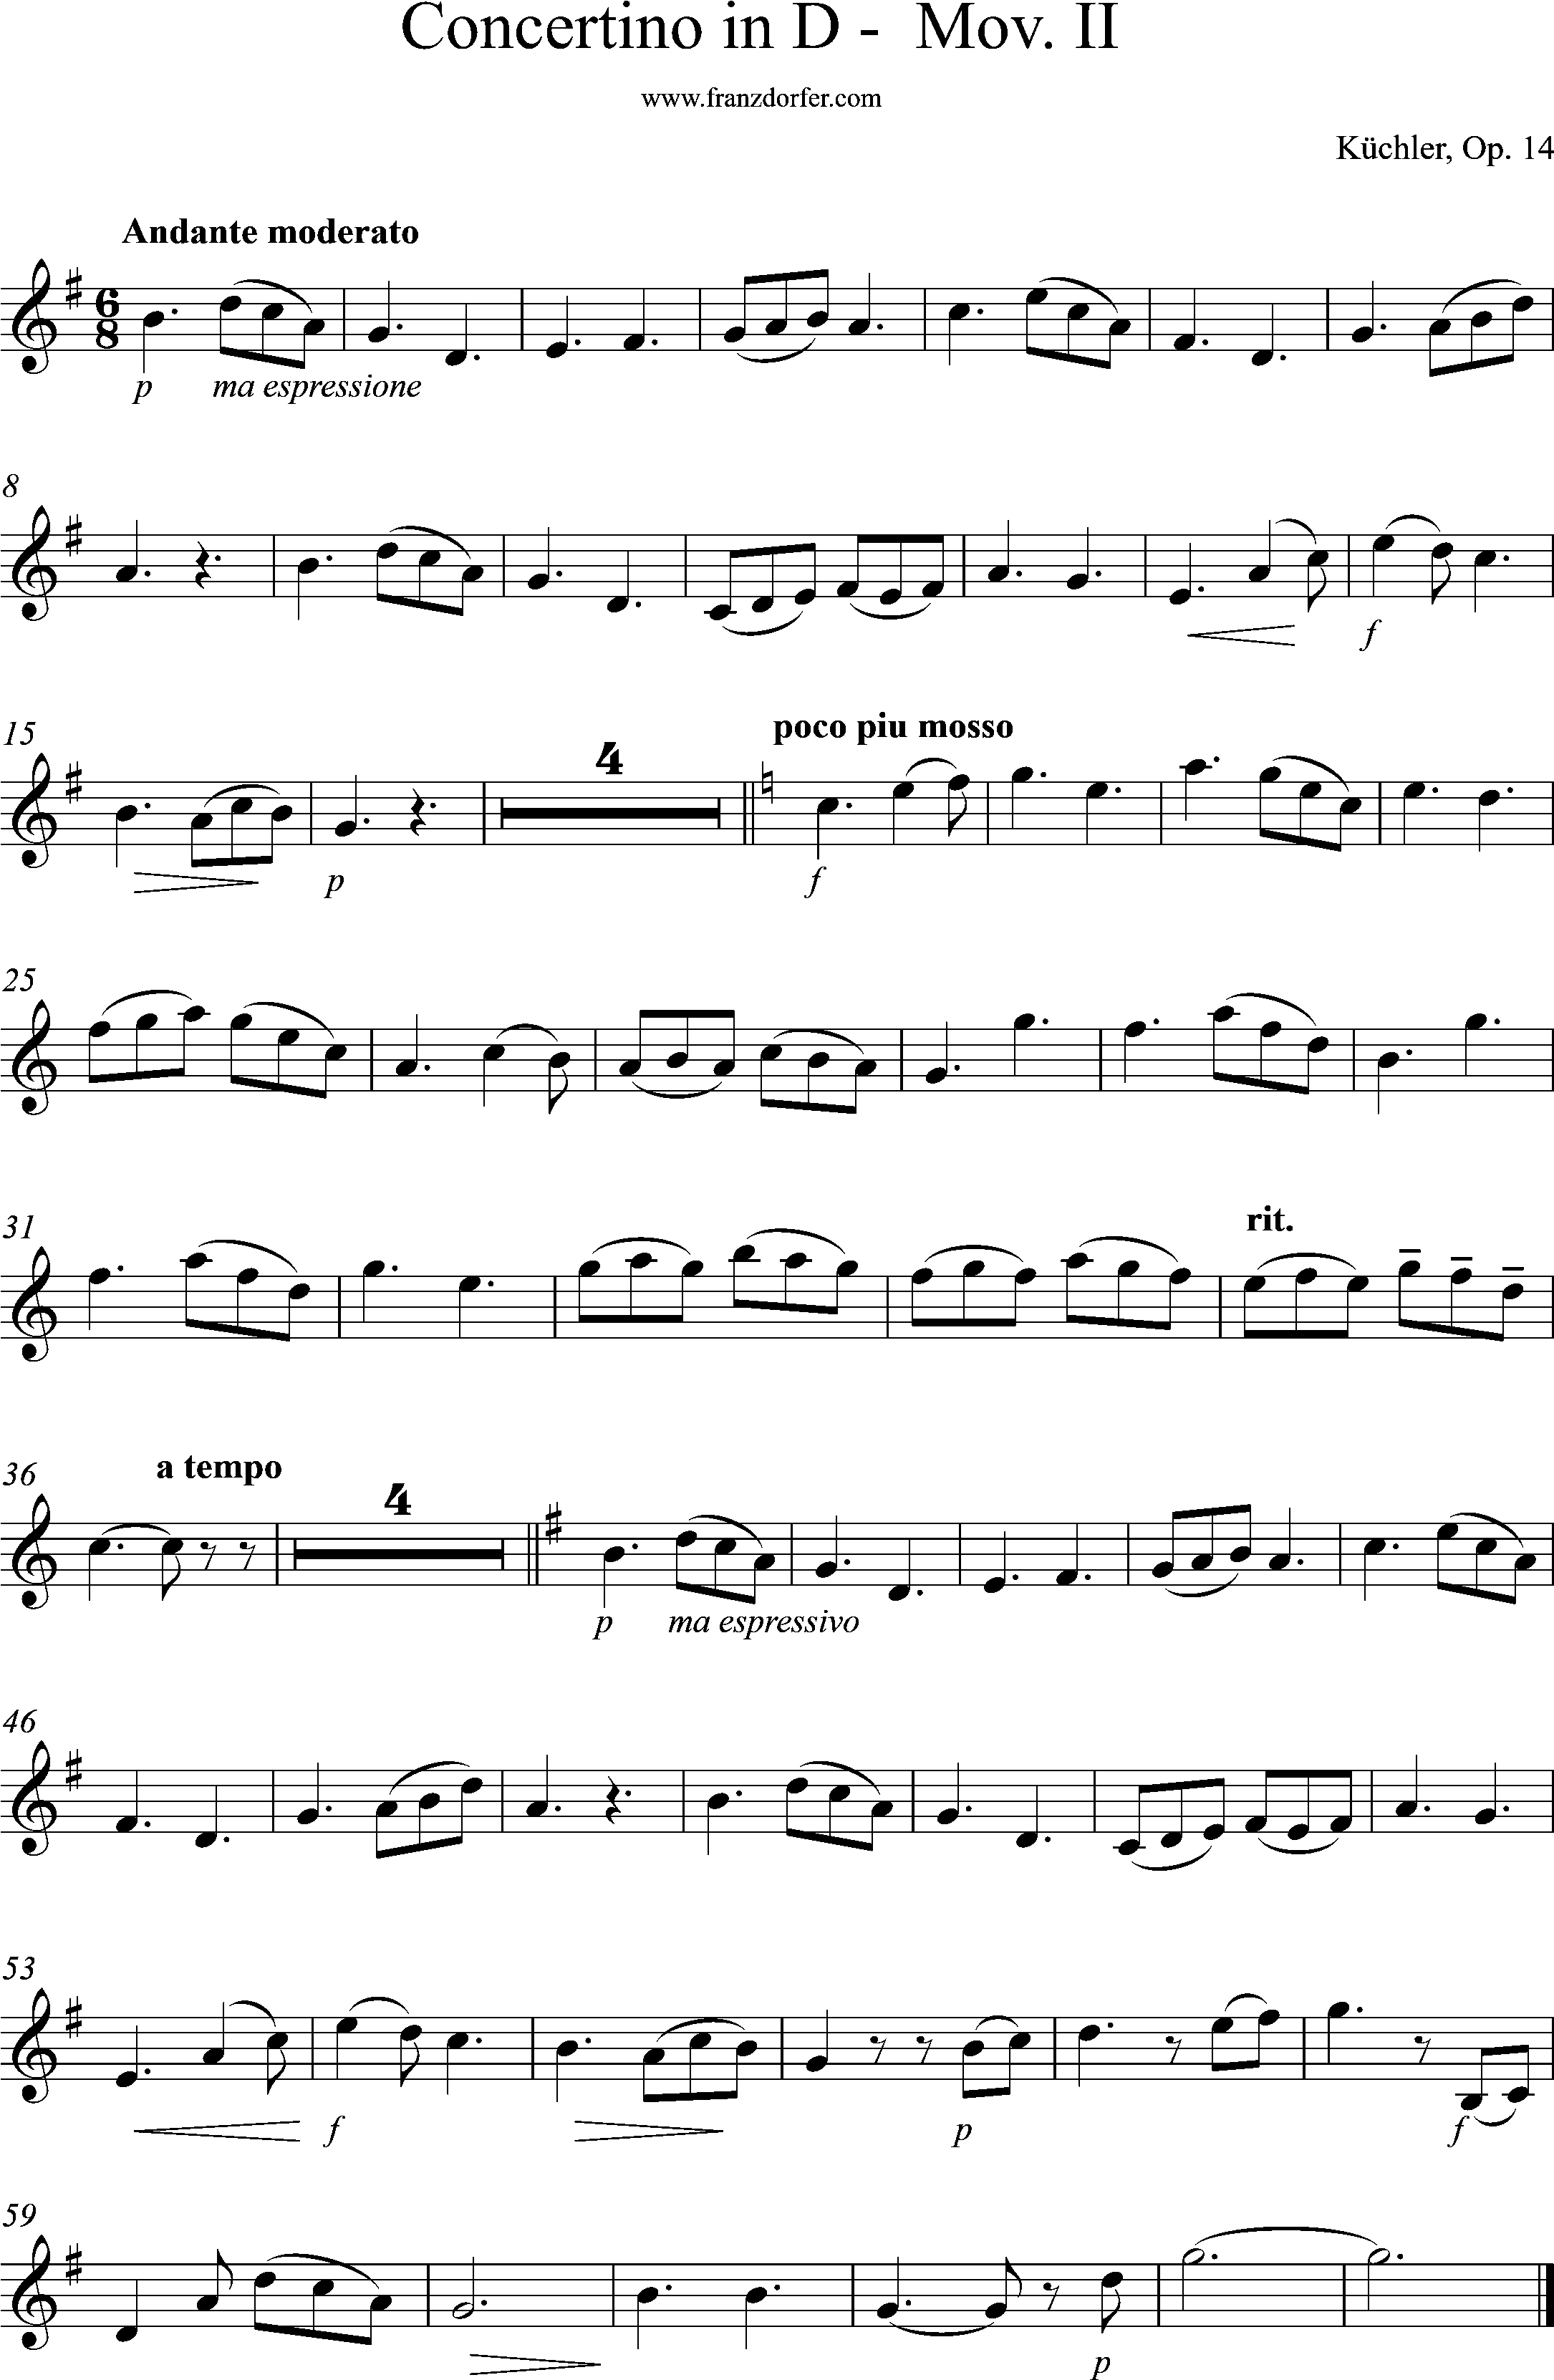 Solopart, Küchler Op. 14, Andante moderato